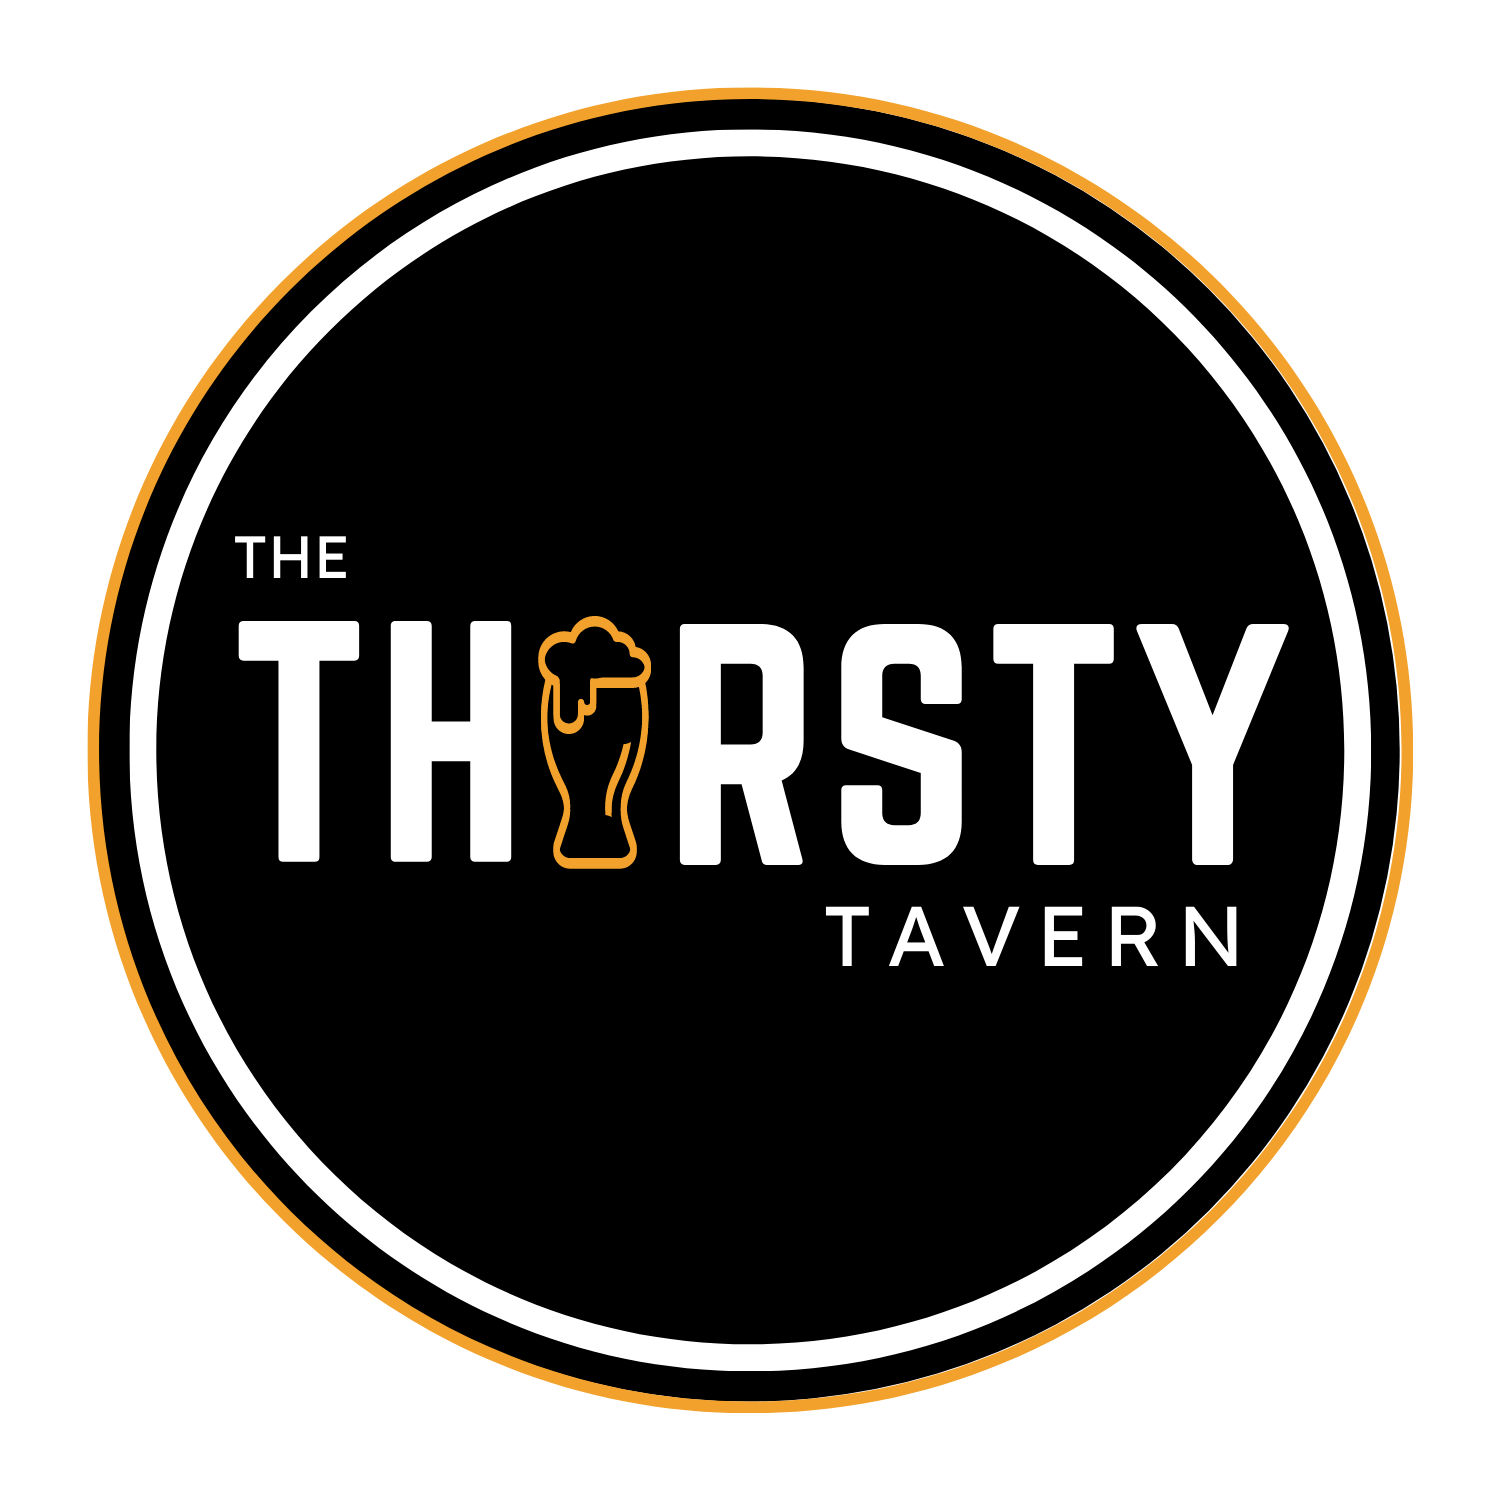 The Thirsty Tavern